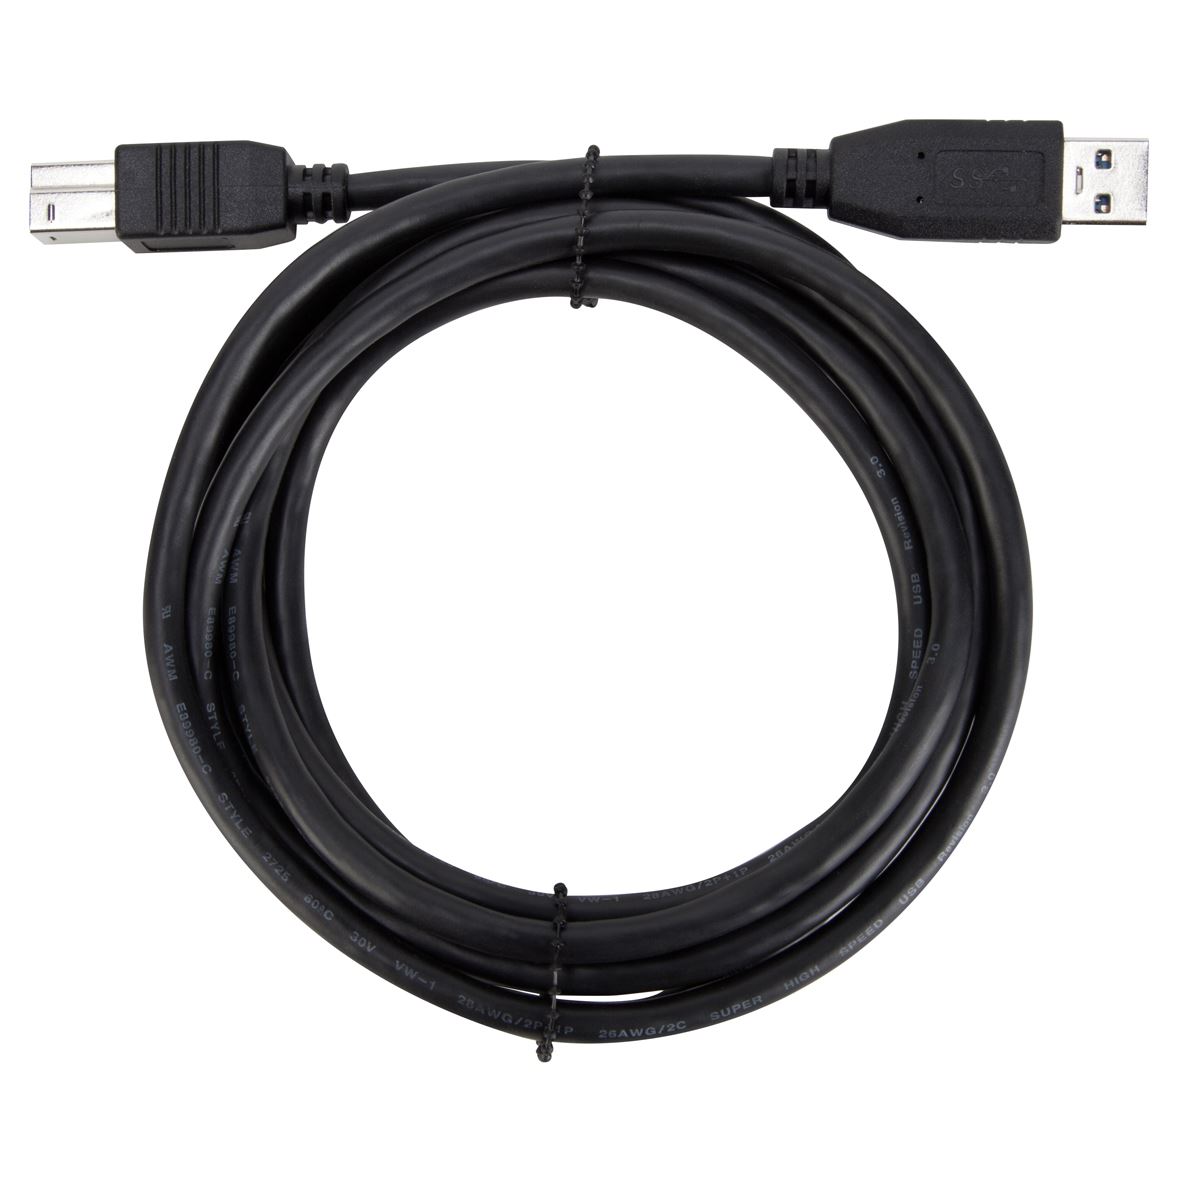 Targus USB 3.0 A-Plug to Cable, - Black